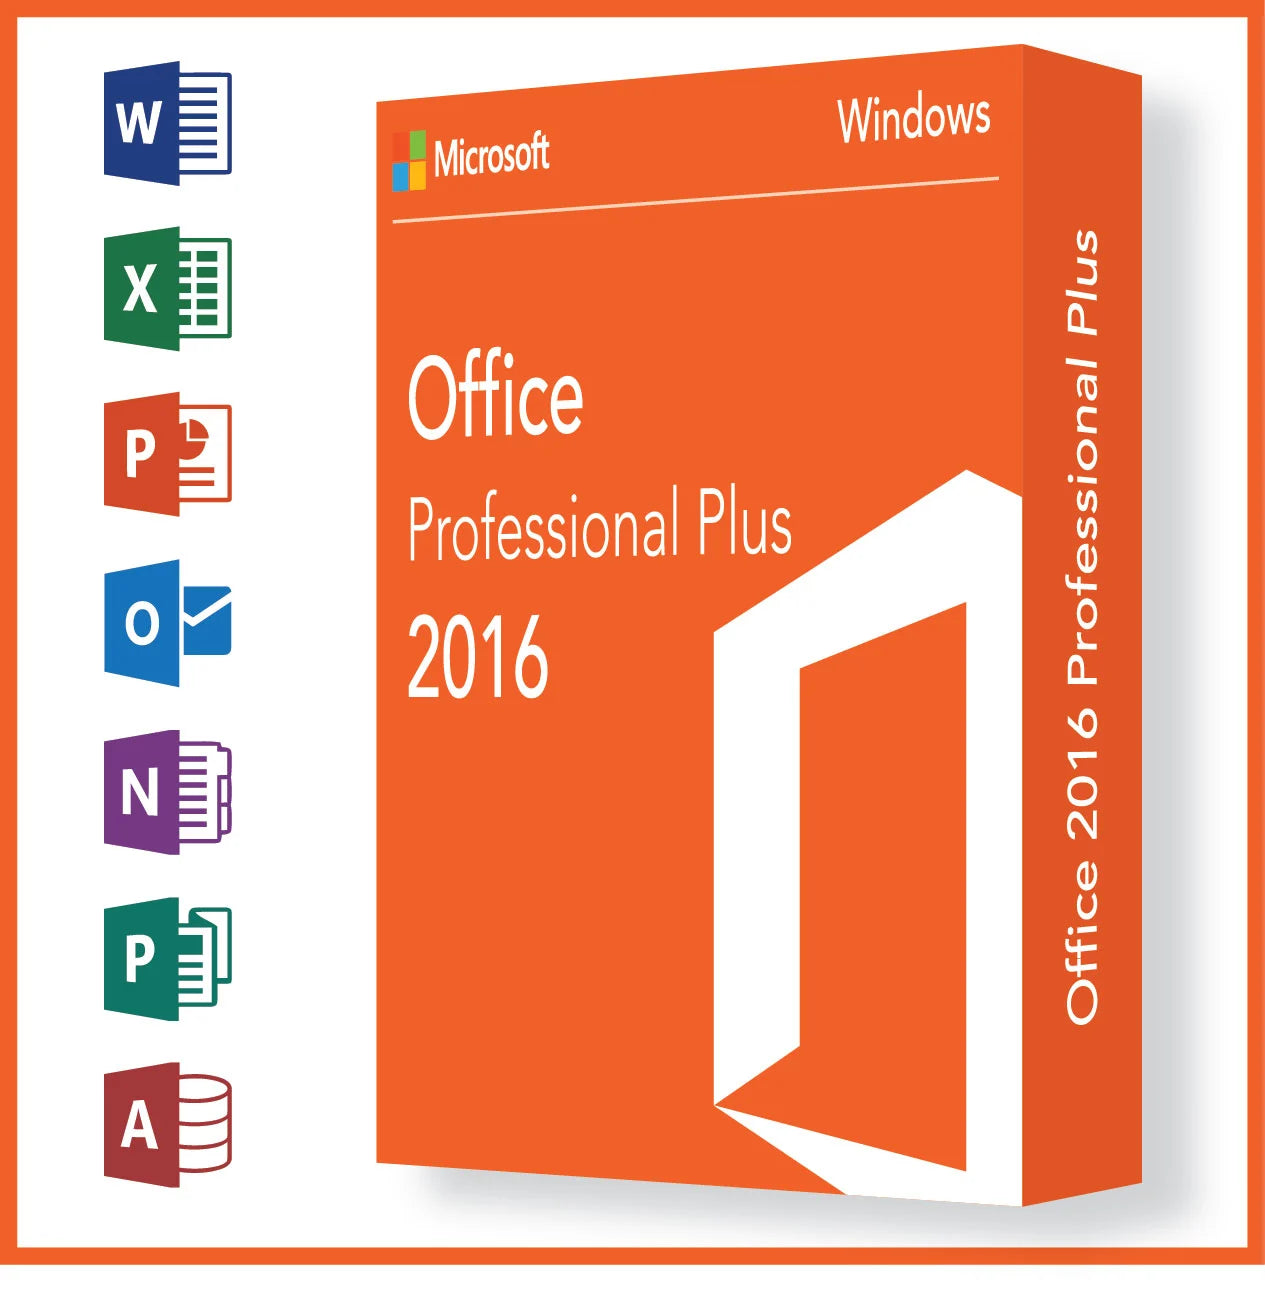 Microsoft Office Professional Plus 2016 - Lifetime License Key